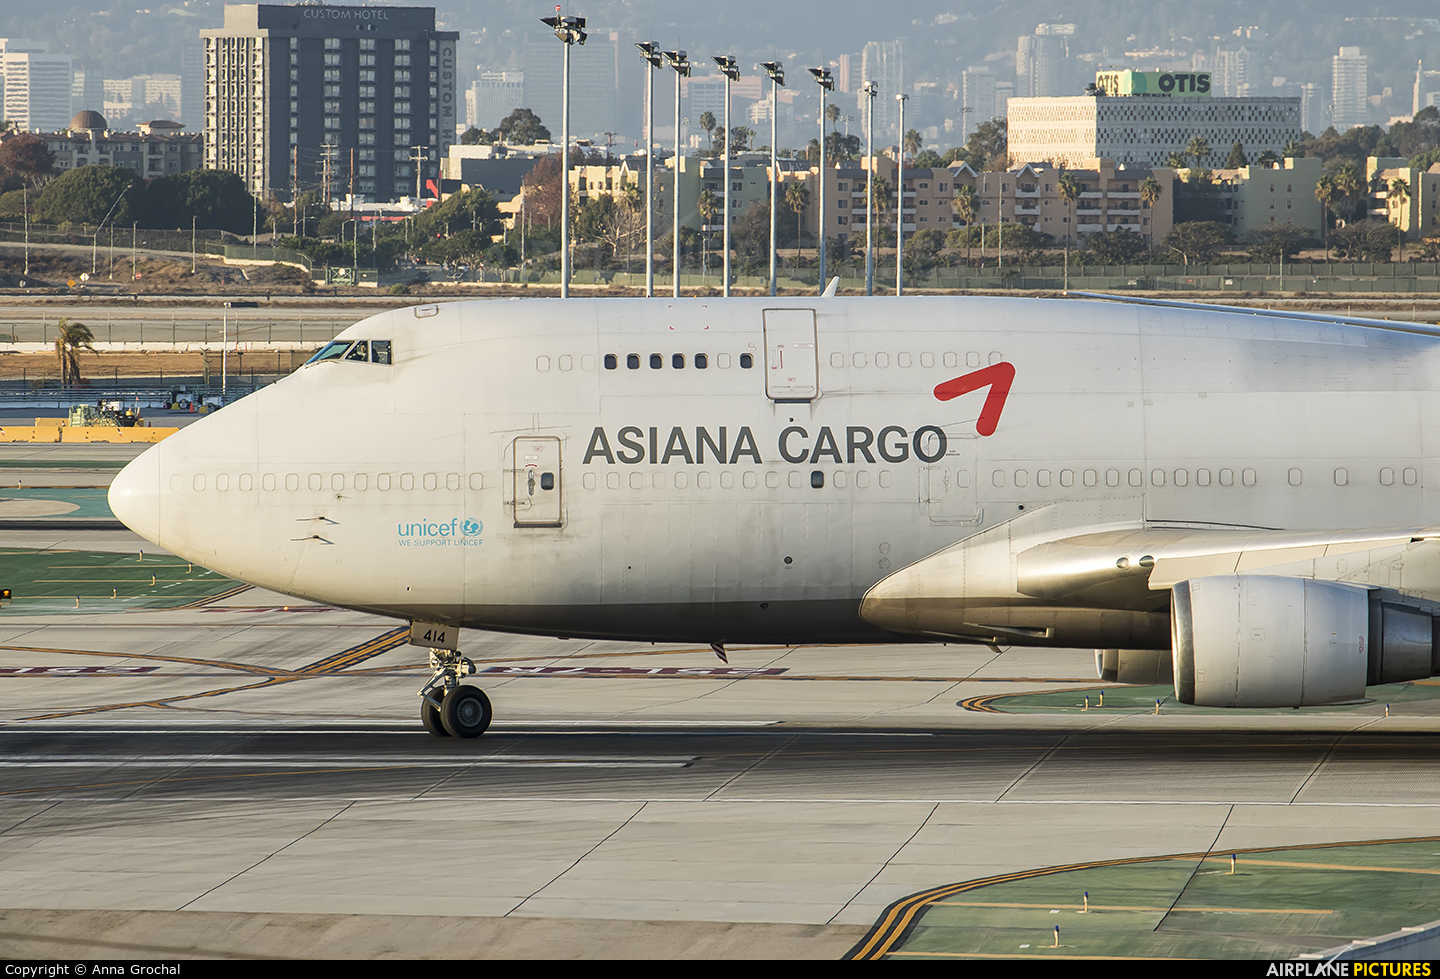 Asiana Cargo HL7414 aircraft at Los Angeles Intl